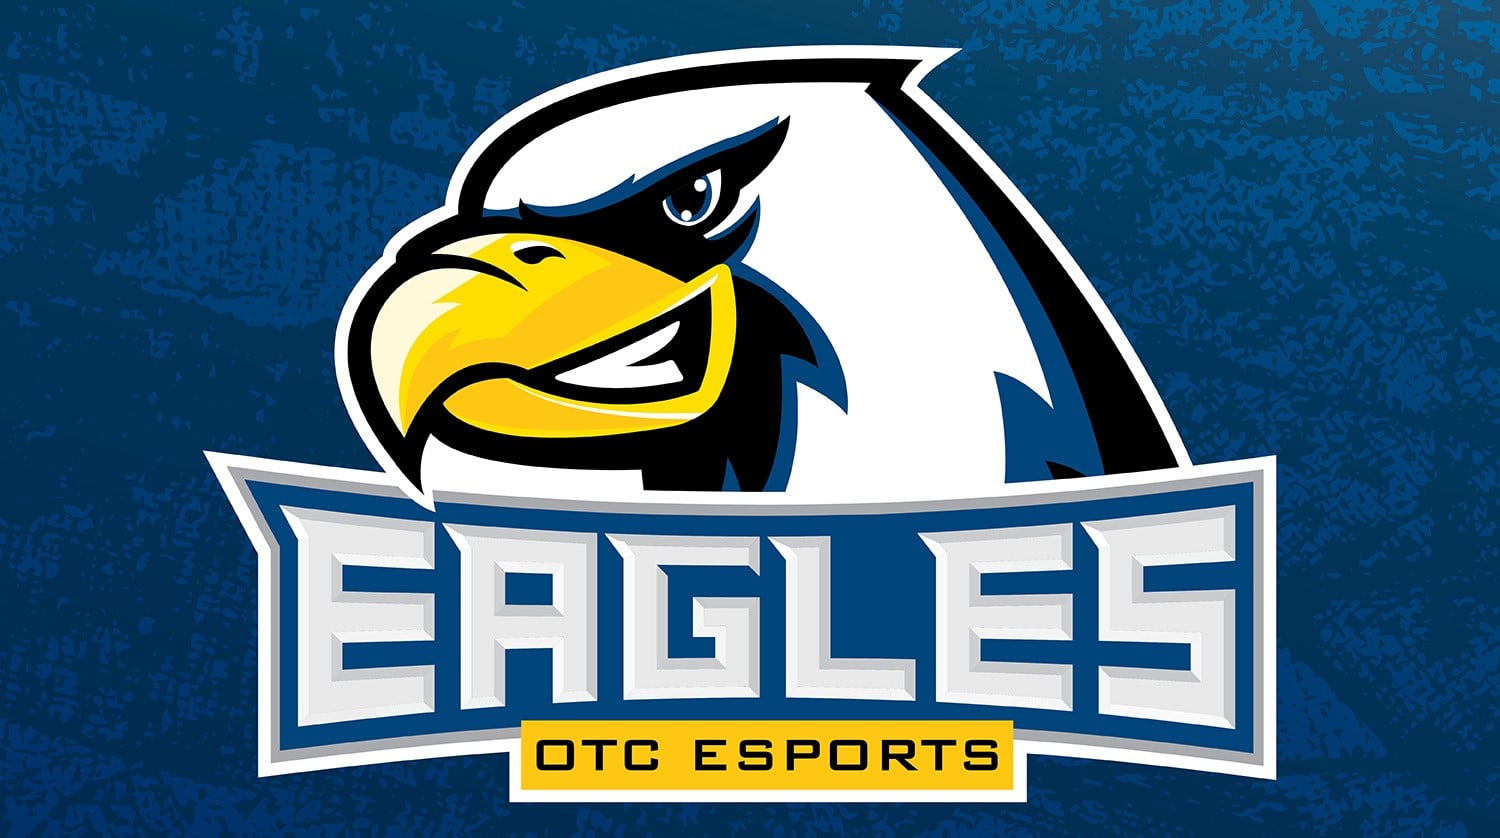 OTC eSports logo